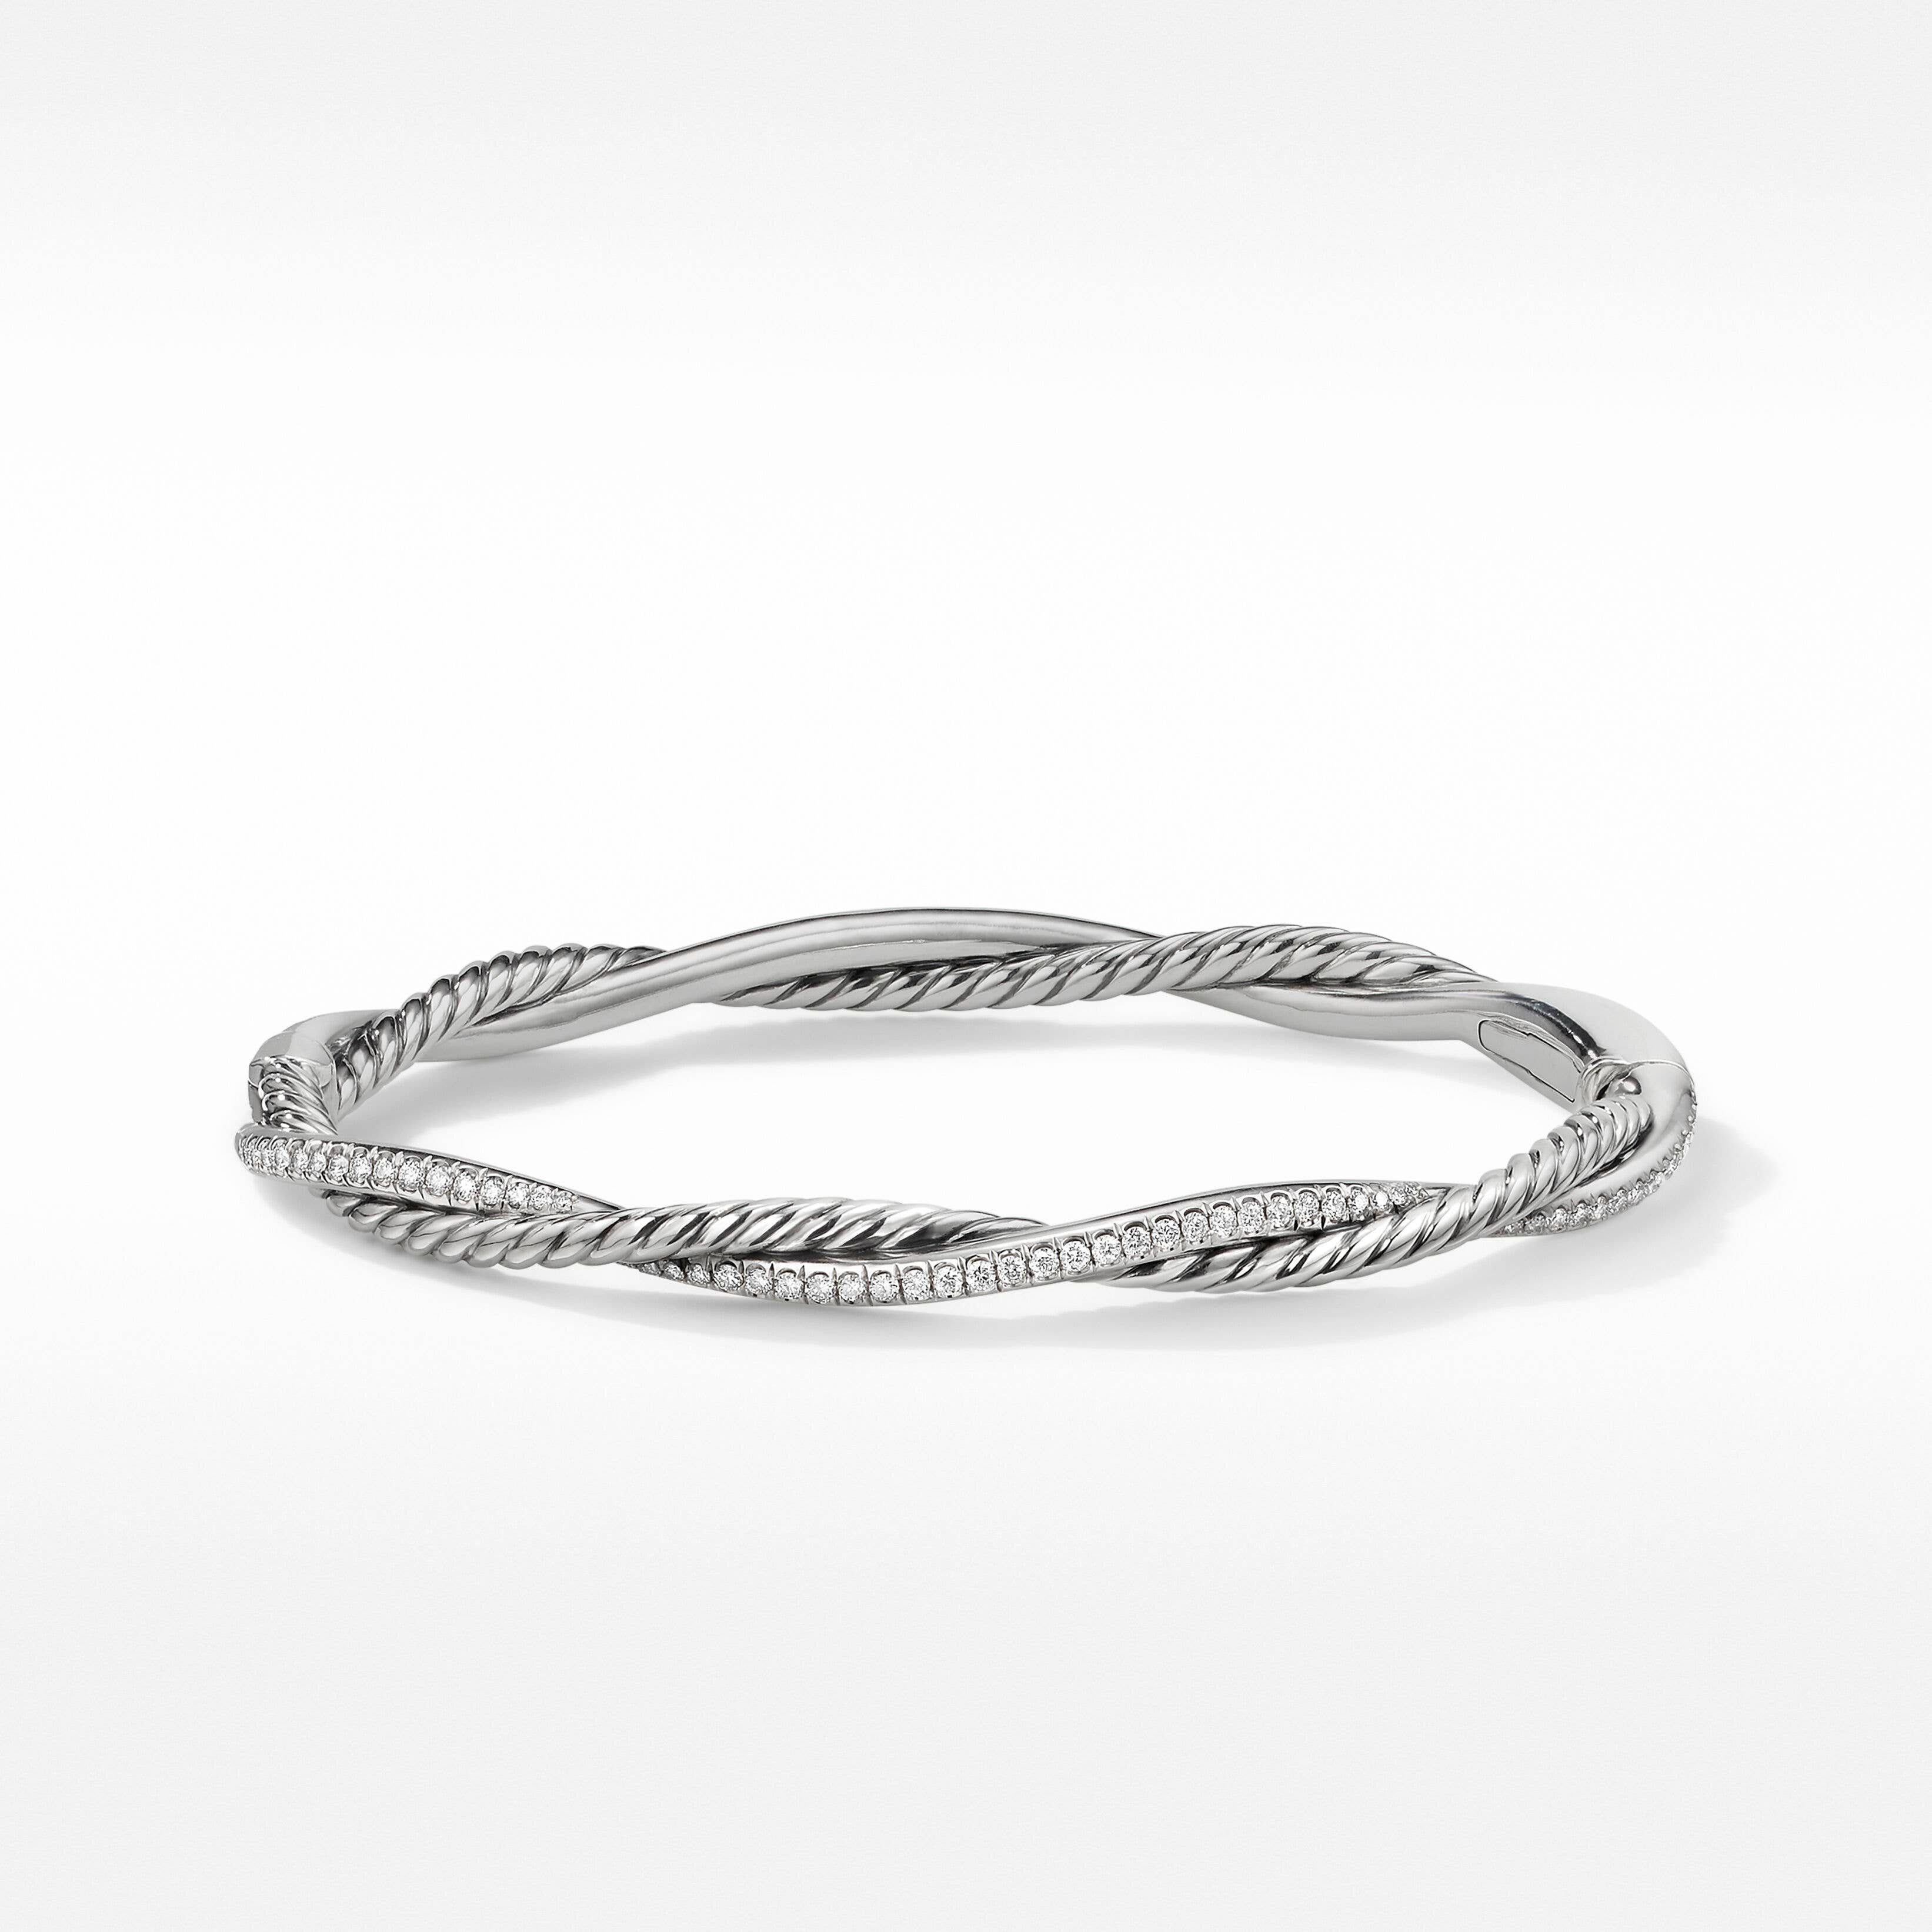 Petite Infinity Bracelet in Sterling Silver with Pavé Diamonds